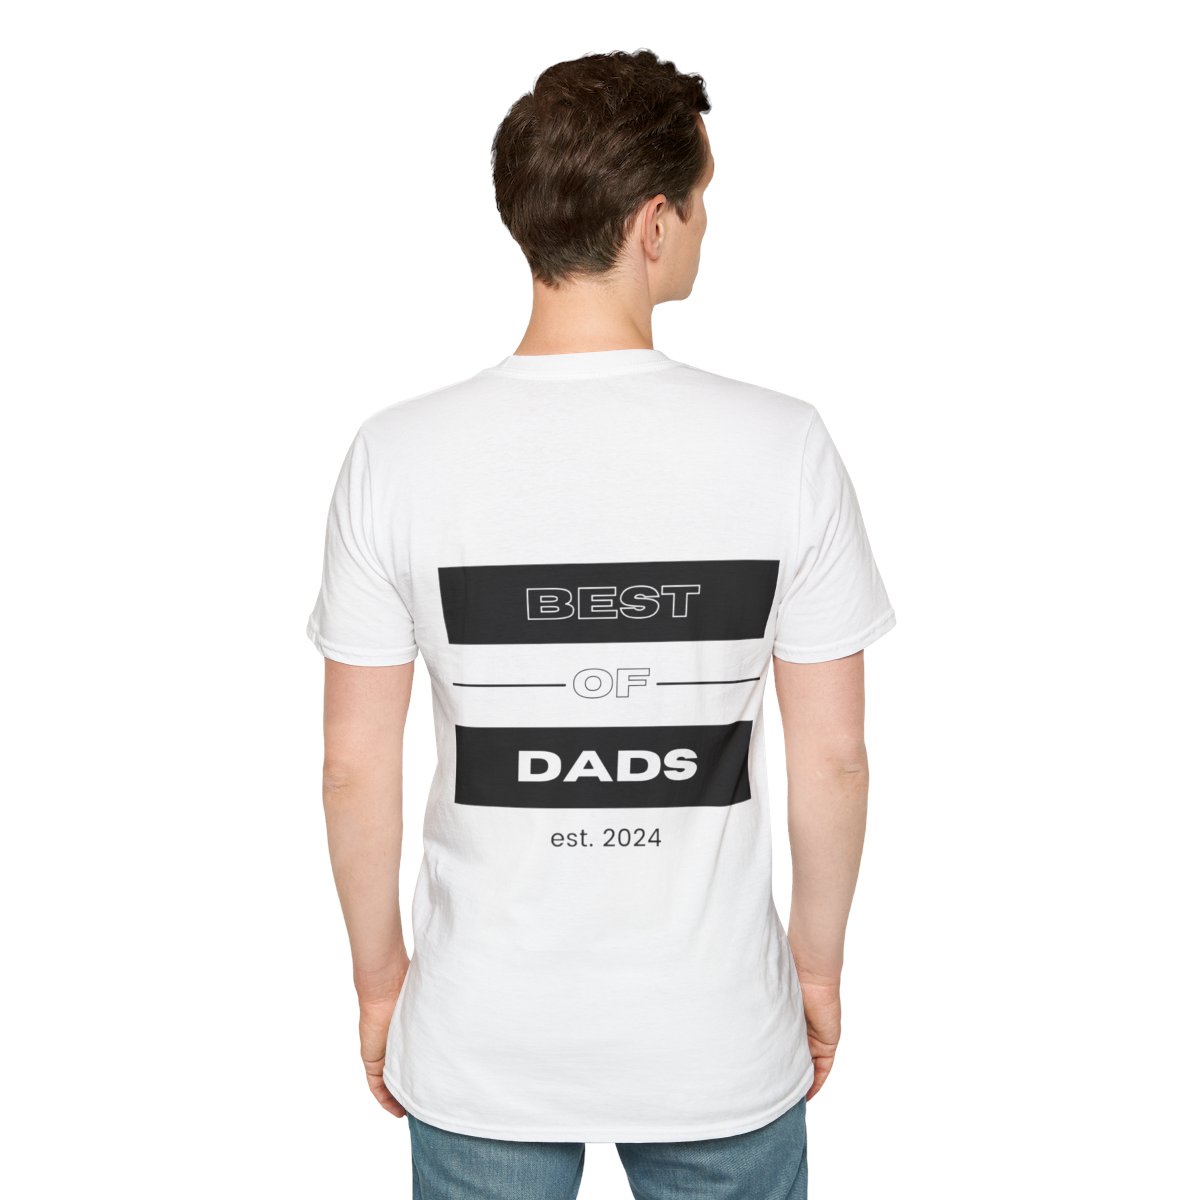 Best of dads est. 2024